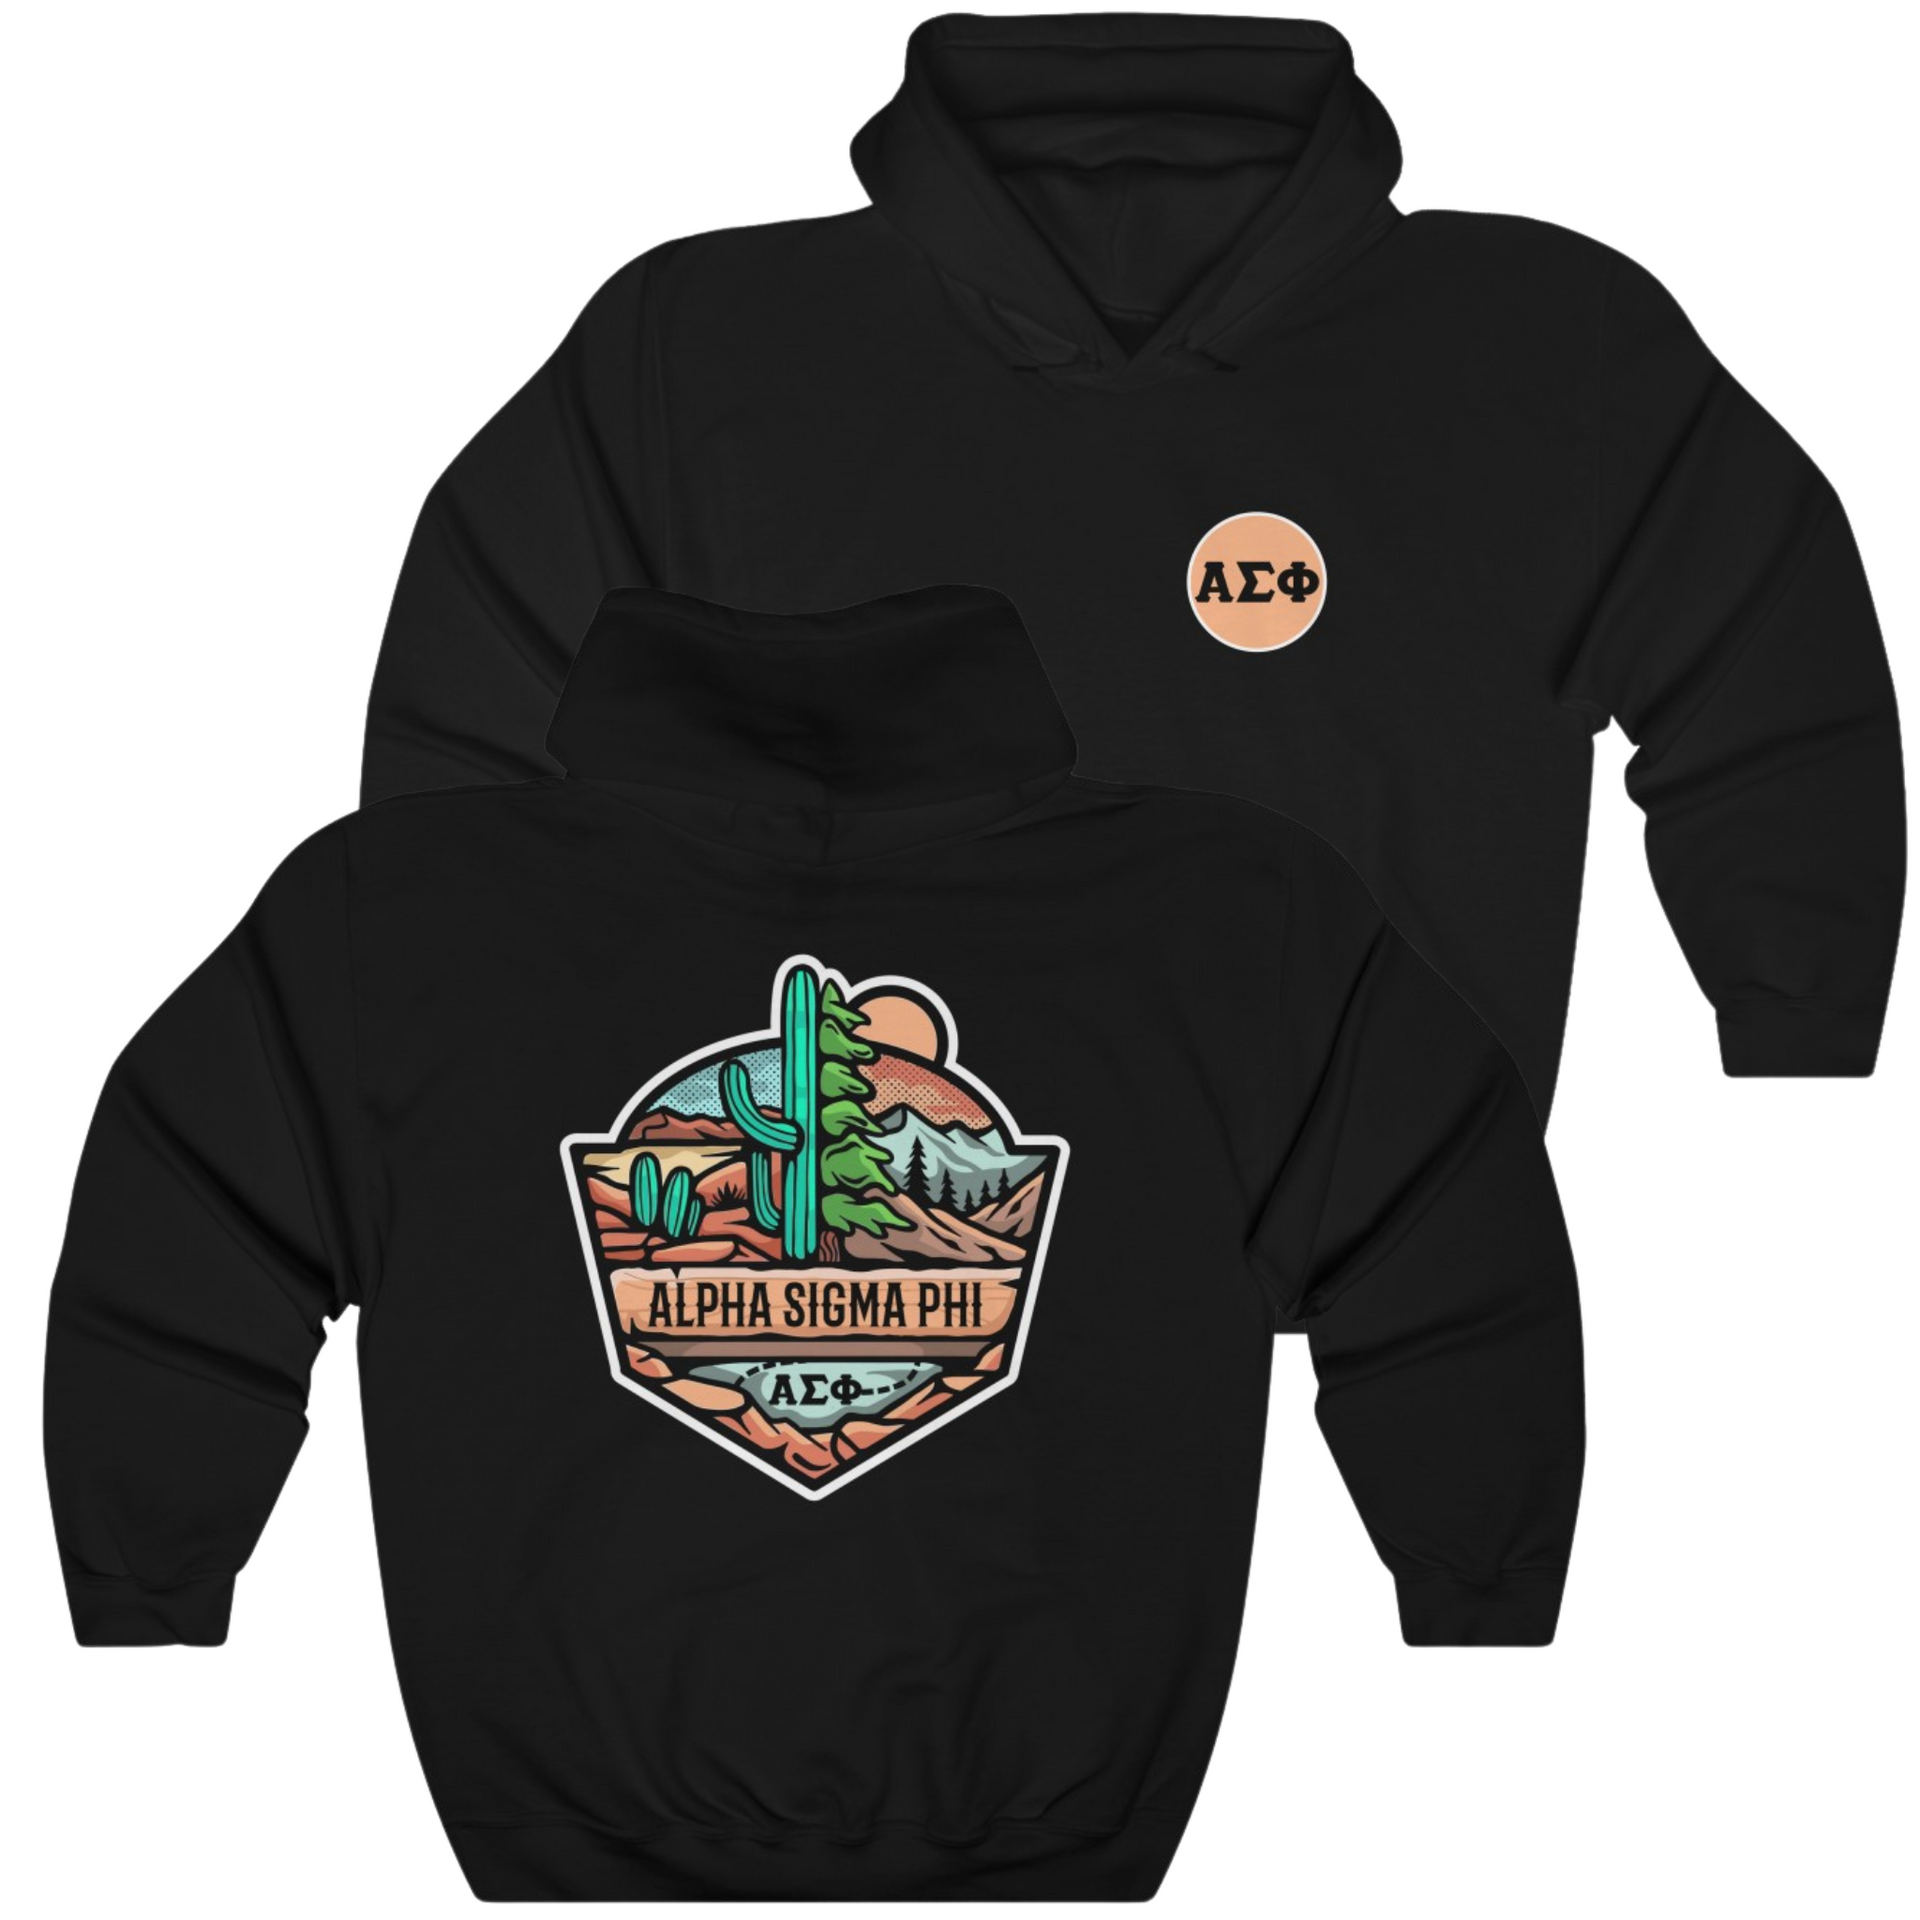 Black Alpha Sigma Phi Graphic Hoodie | Desert Mountains | Alpha Sigma Phi Fraternity Shirt